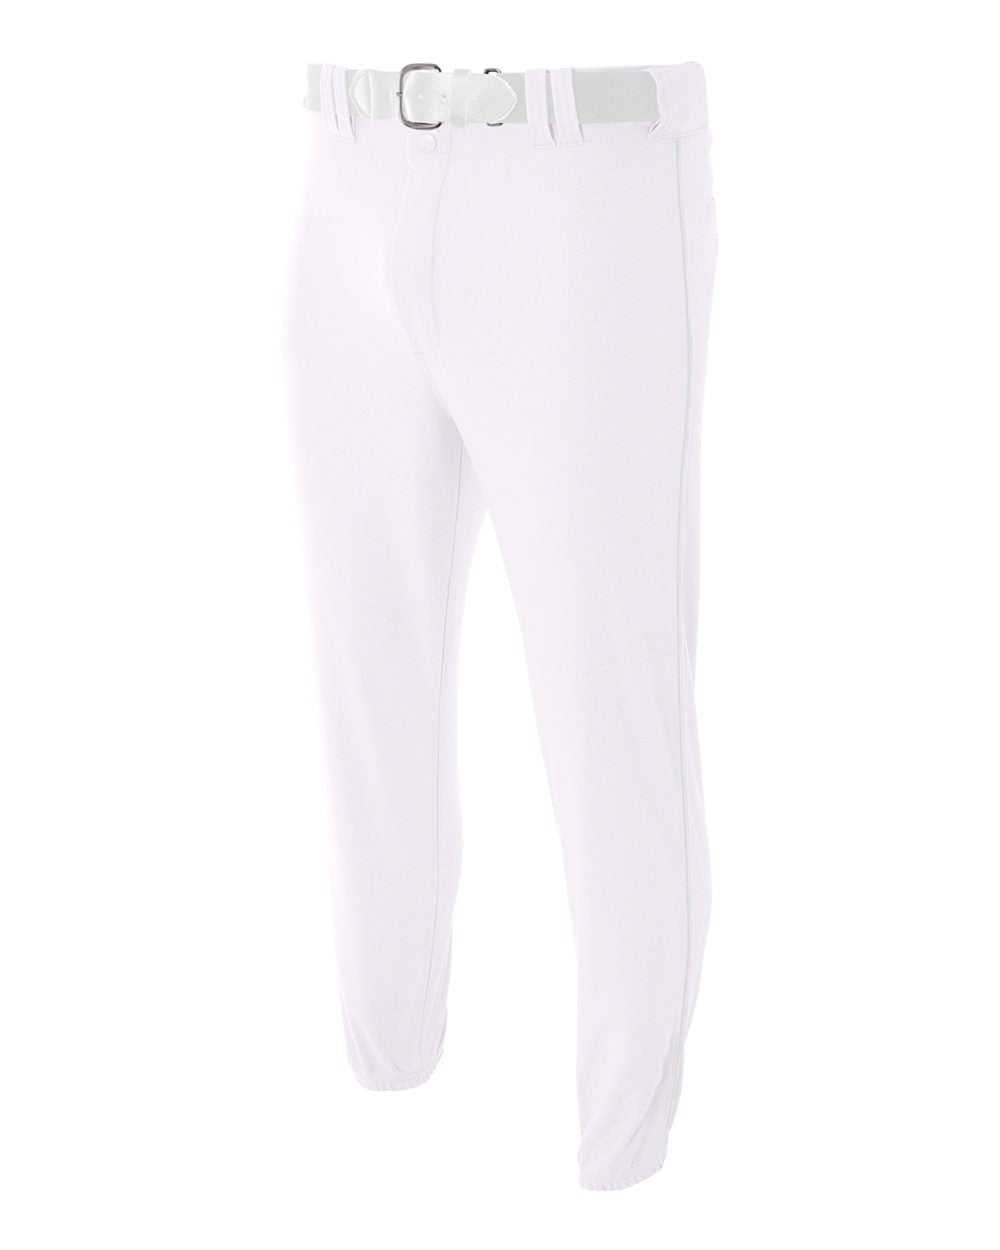 A4 N6178 Pro Style Elastic Bottom Baseball Pant - White - HIT a Double